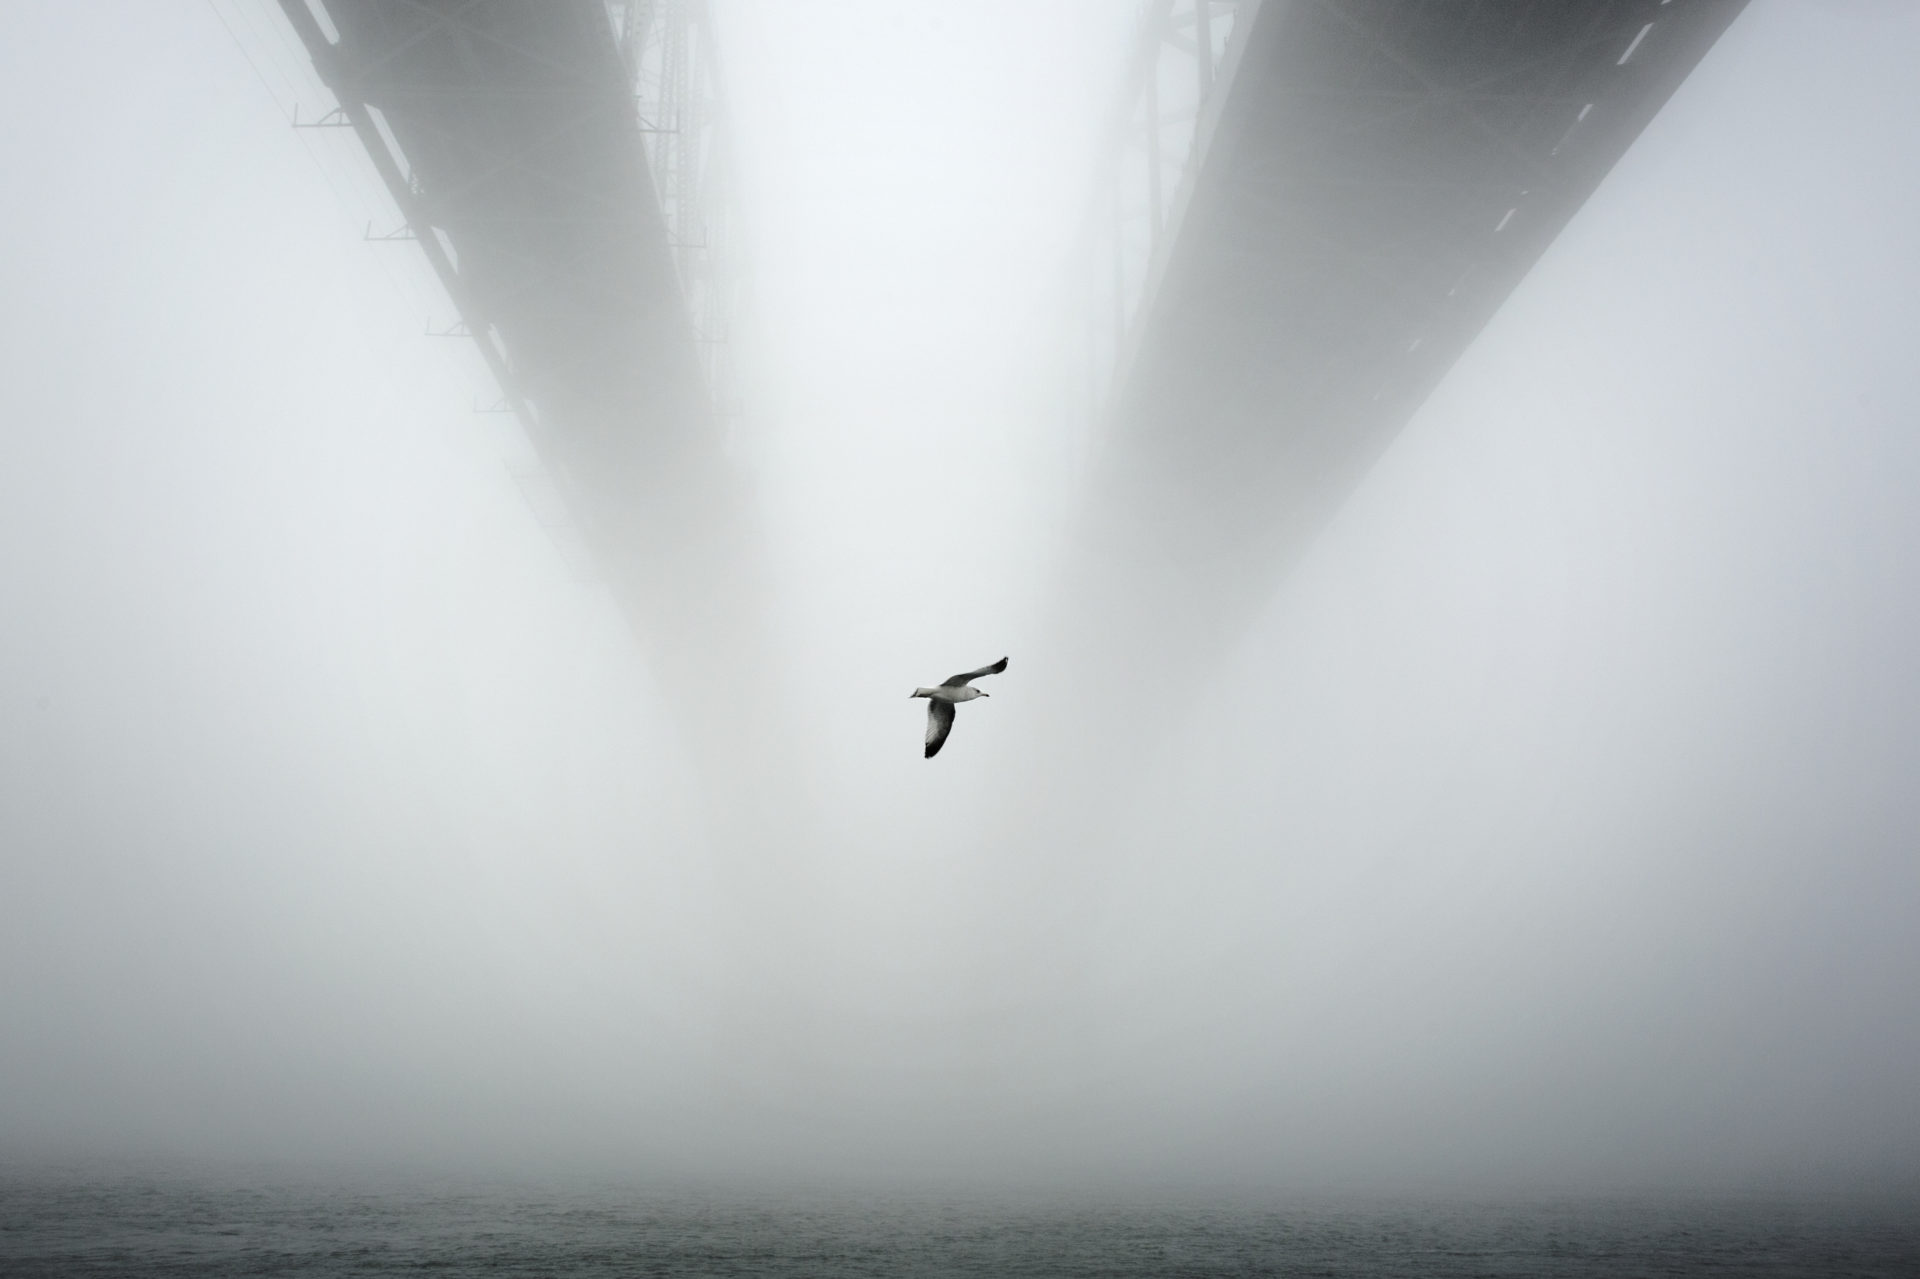 A bird under a large foggy bridge